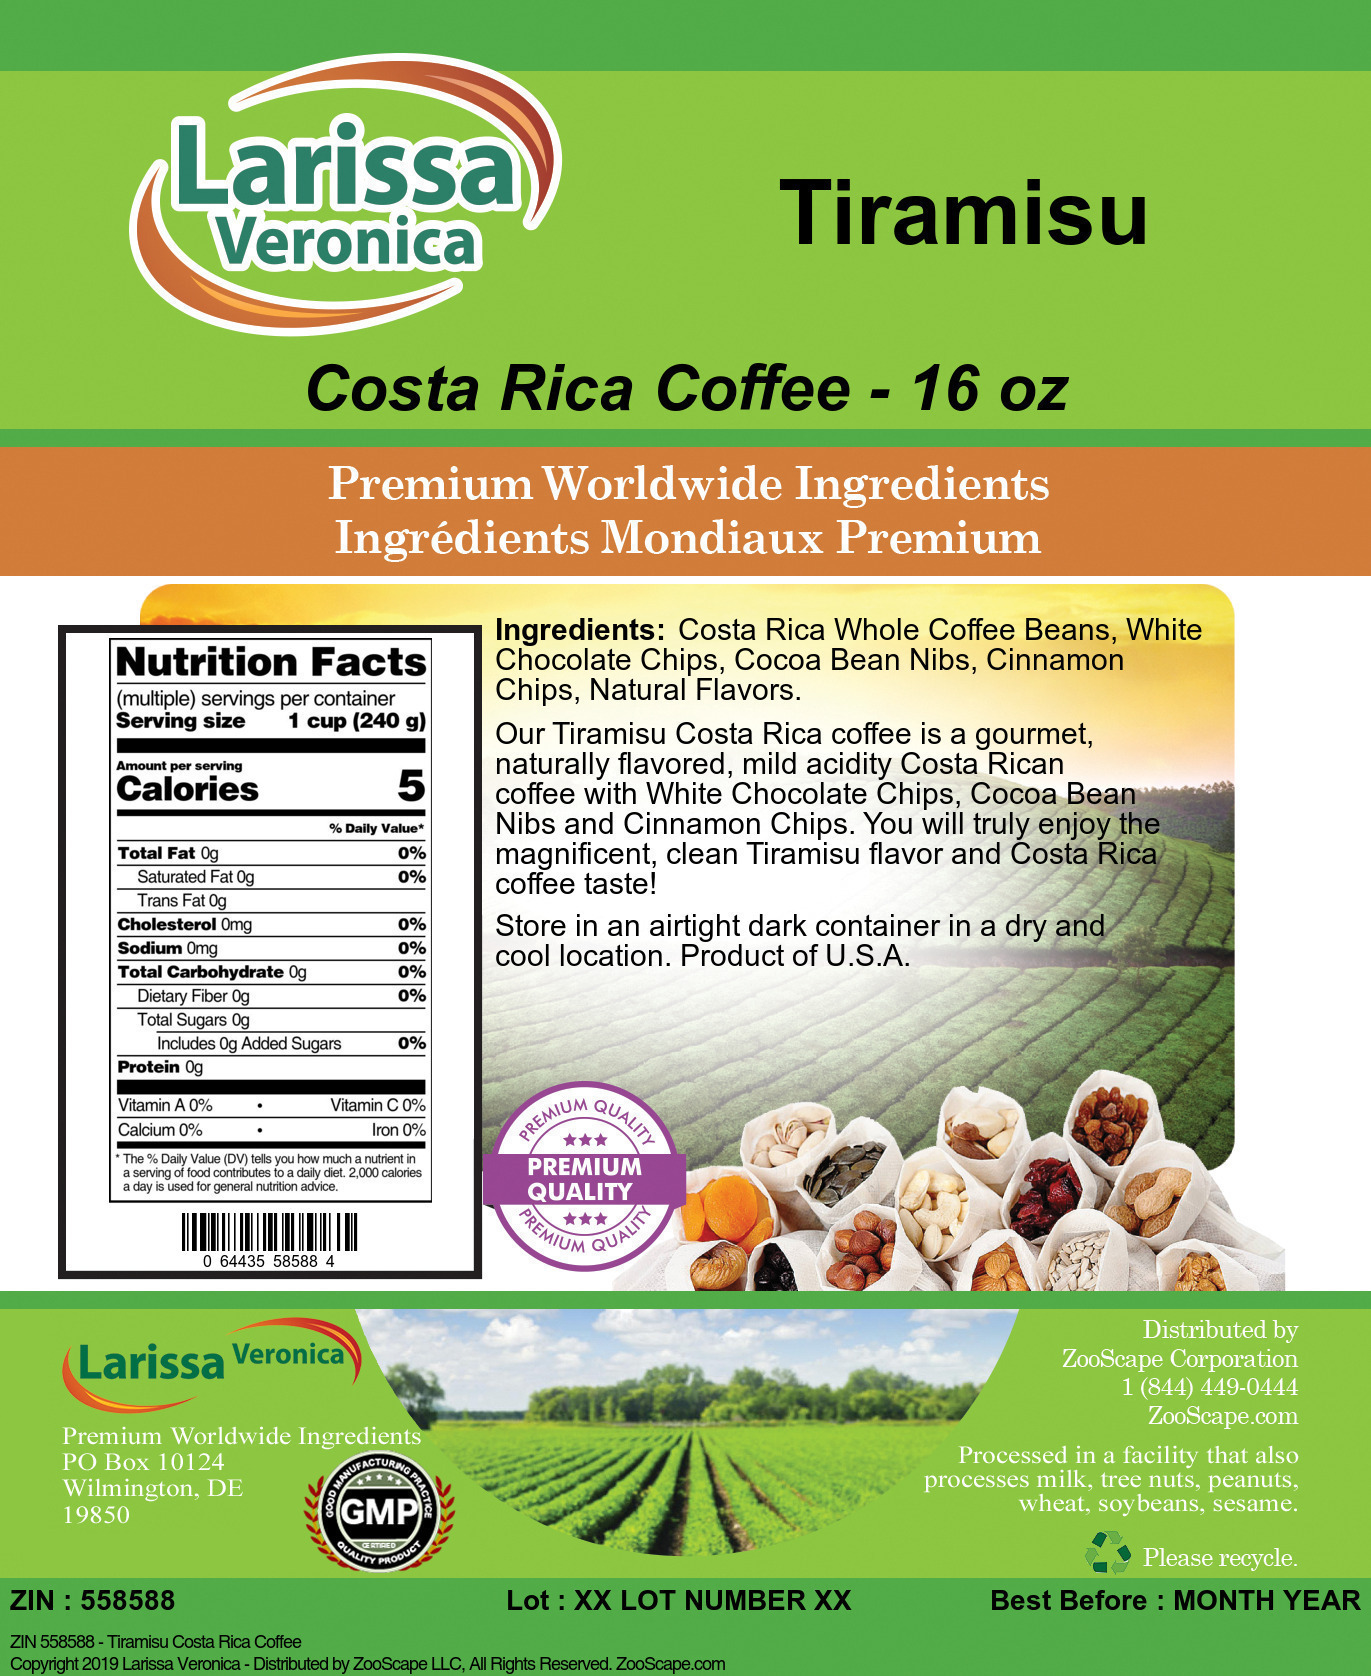 Tiramisu Costa Rica Coffee - Label